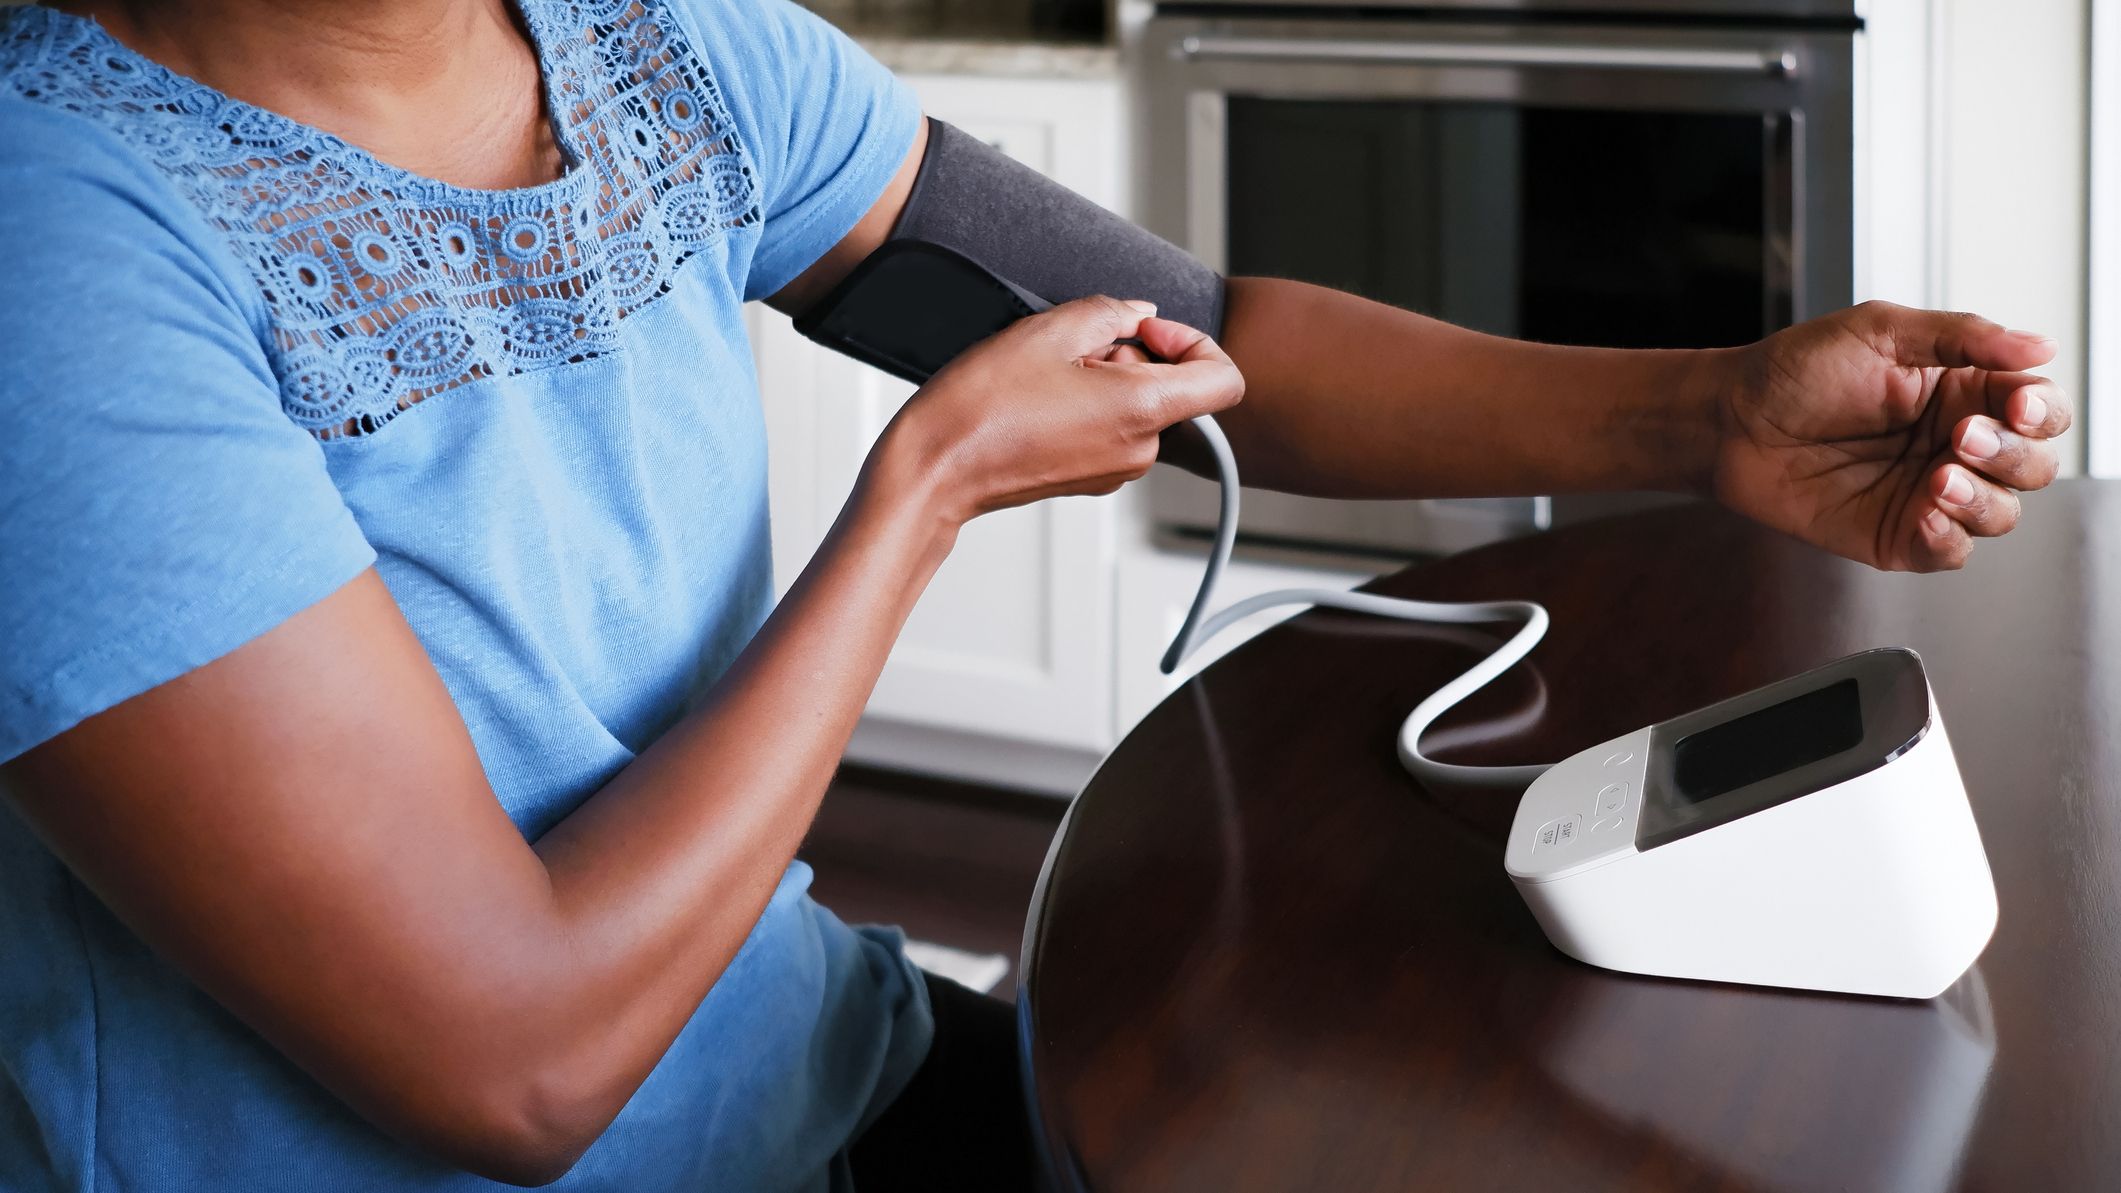 Free Blood Pressure Checks & Health Info (Women's Health & Fitness Day)